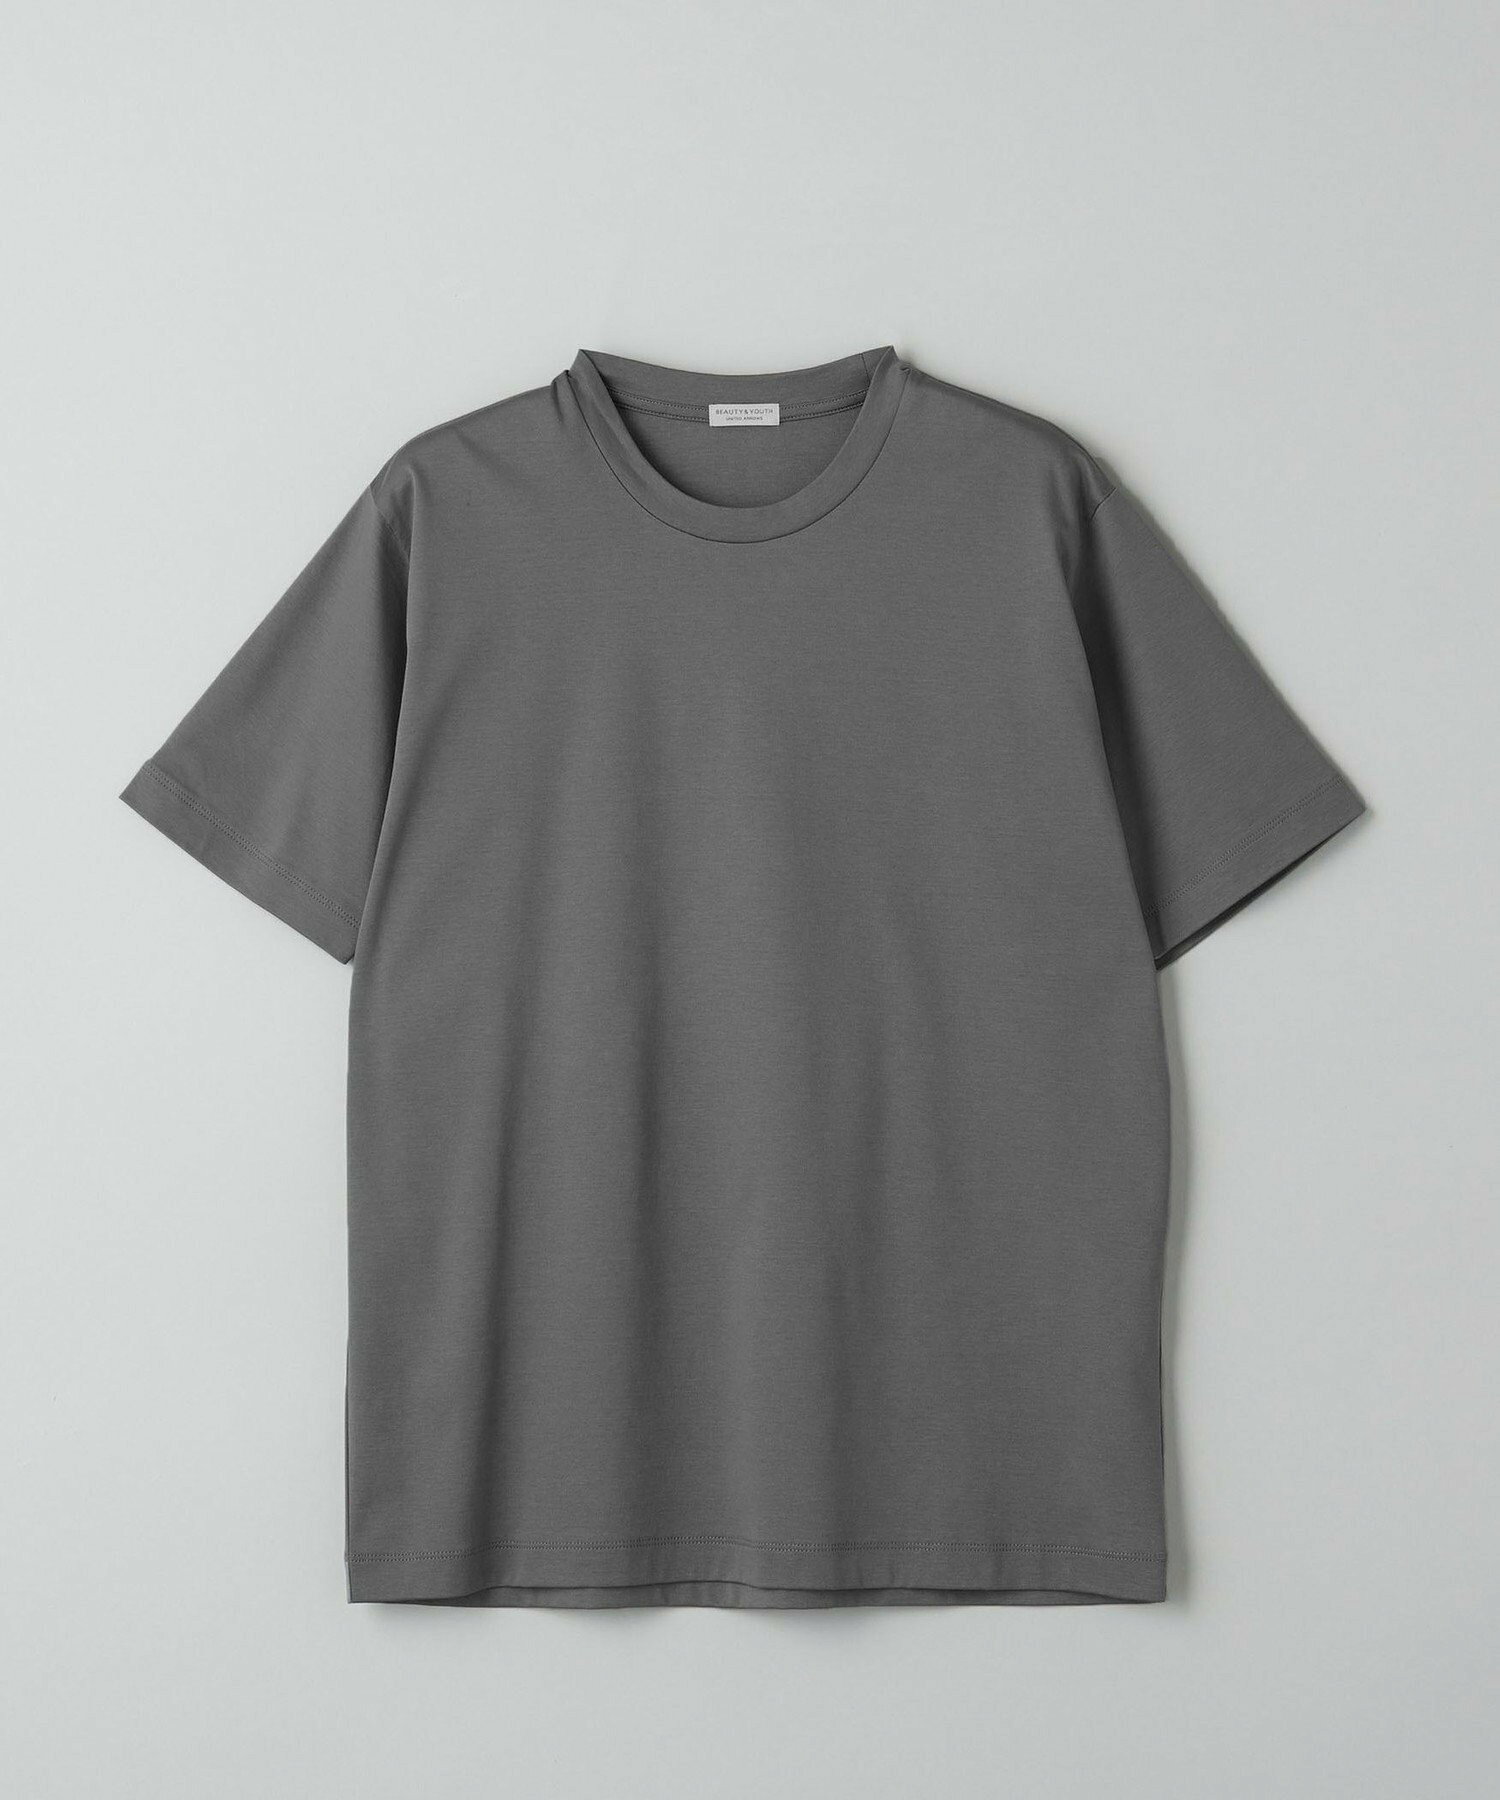 【WEB限定 WARDROBE SMART】NORITAKE スマートフィット Tシャツ